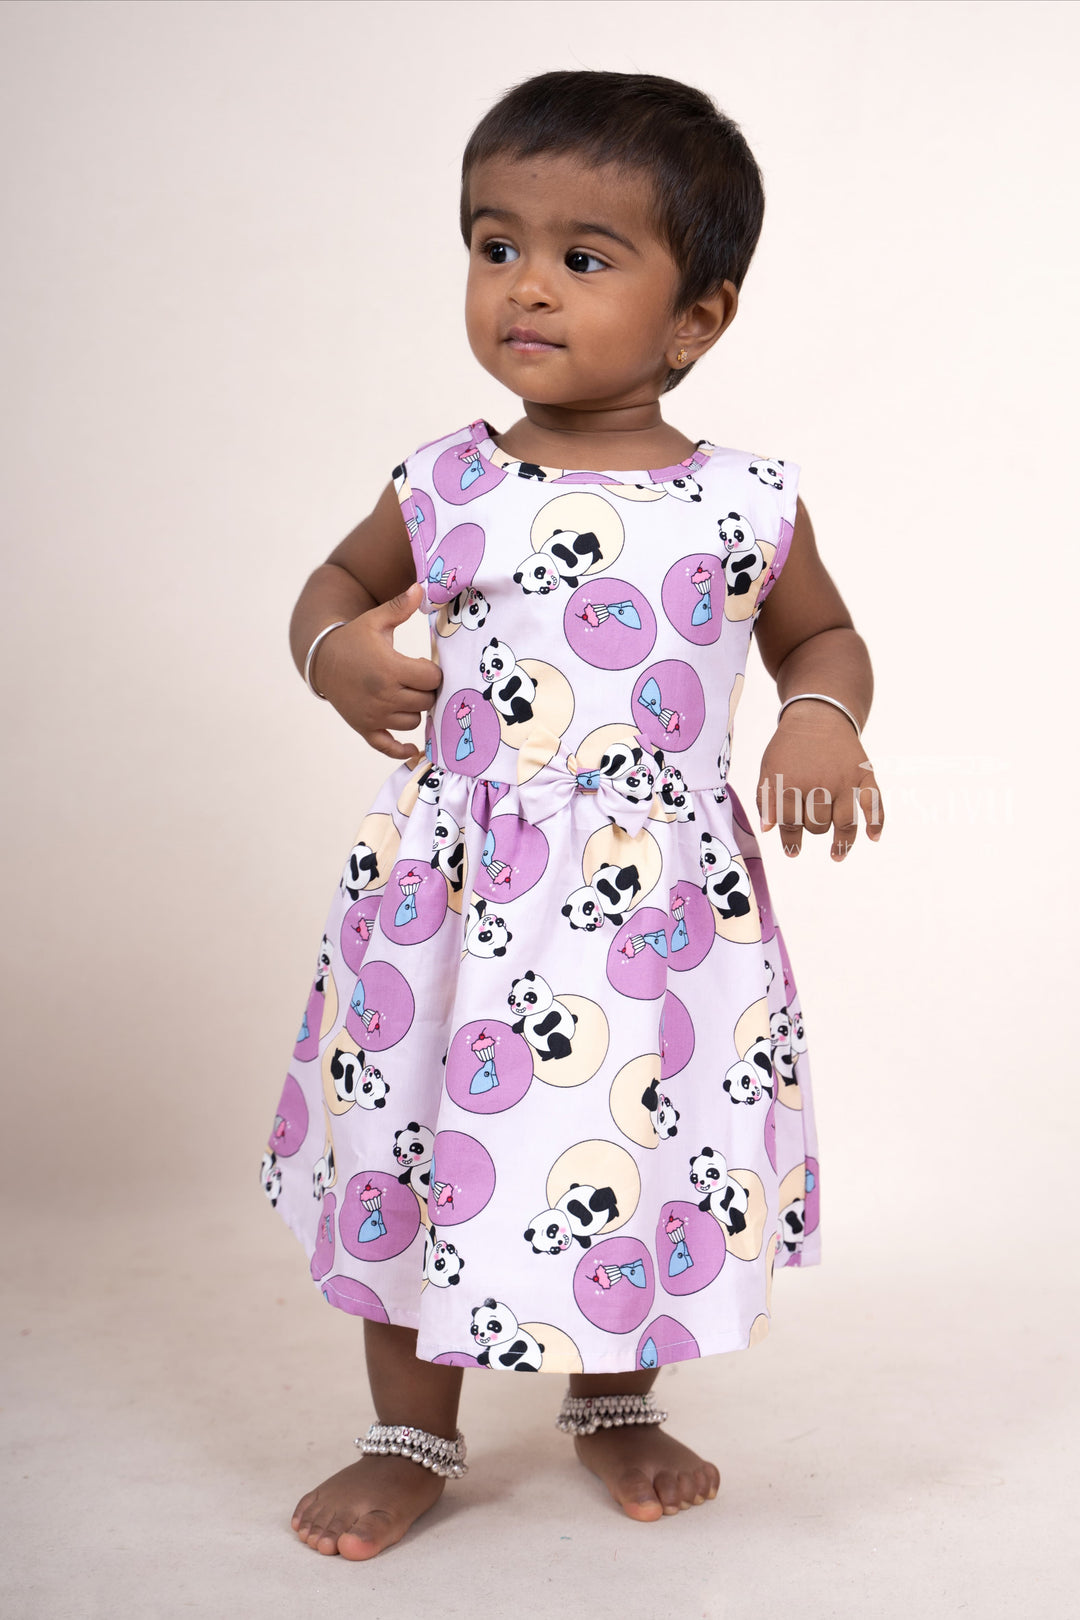 The Nesavu Baby Frock / Jhabla Smart Soft Cotton Sleeveless Play Wear Frock For New Born Infant psr silks Nesavu 14 (6M) / Purple BFJ317B